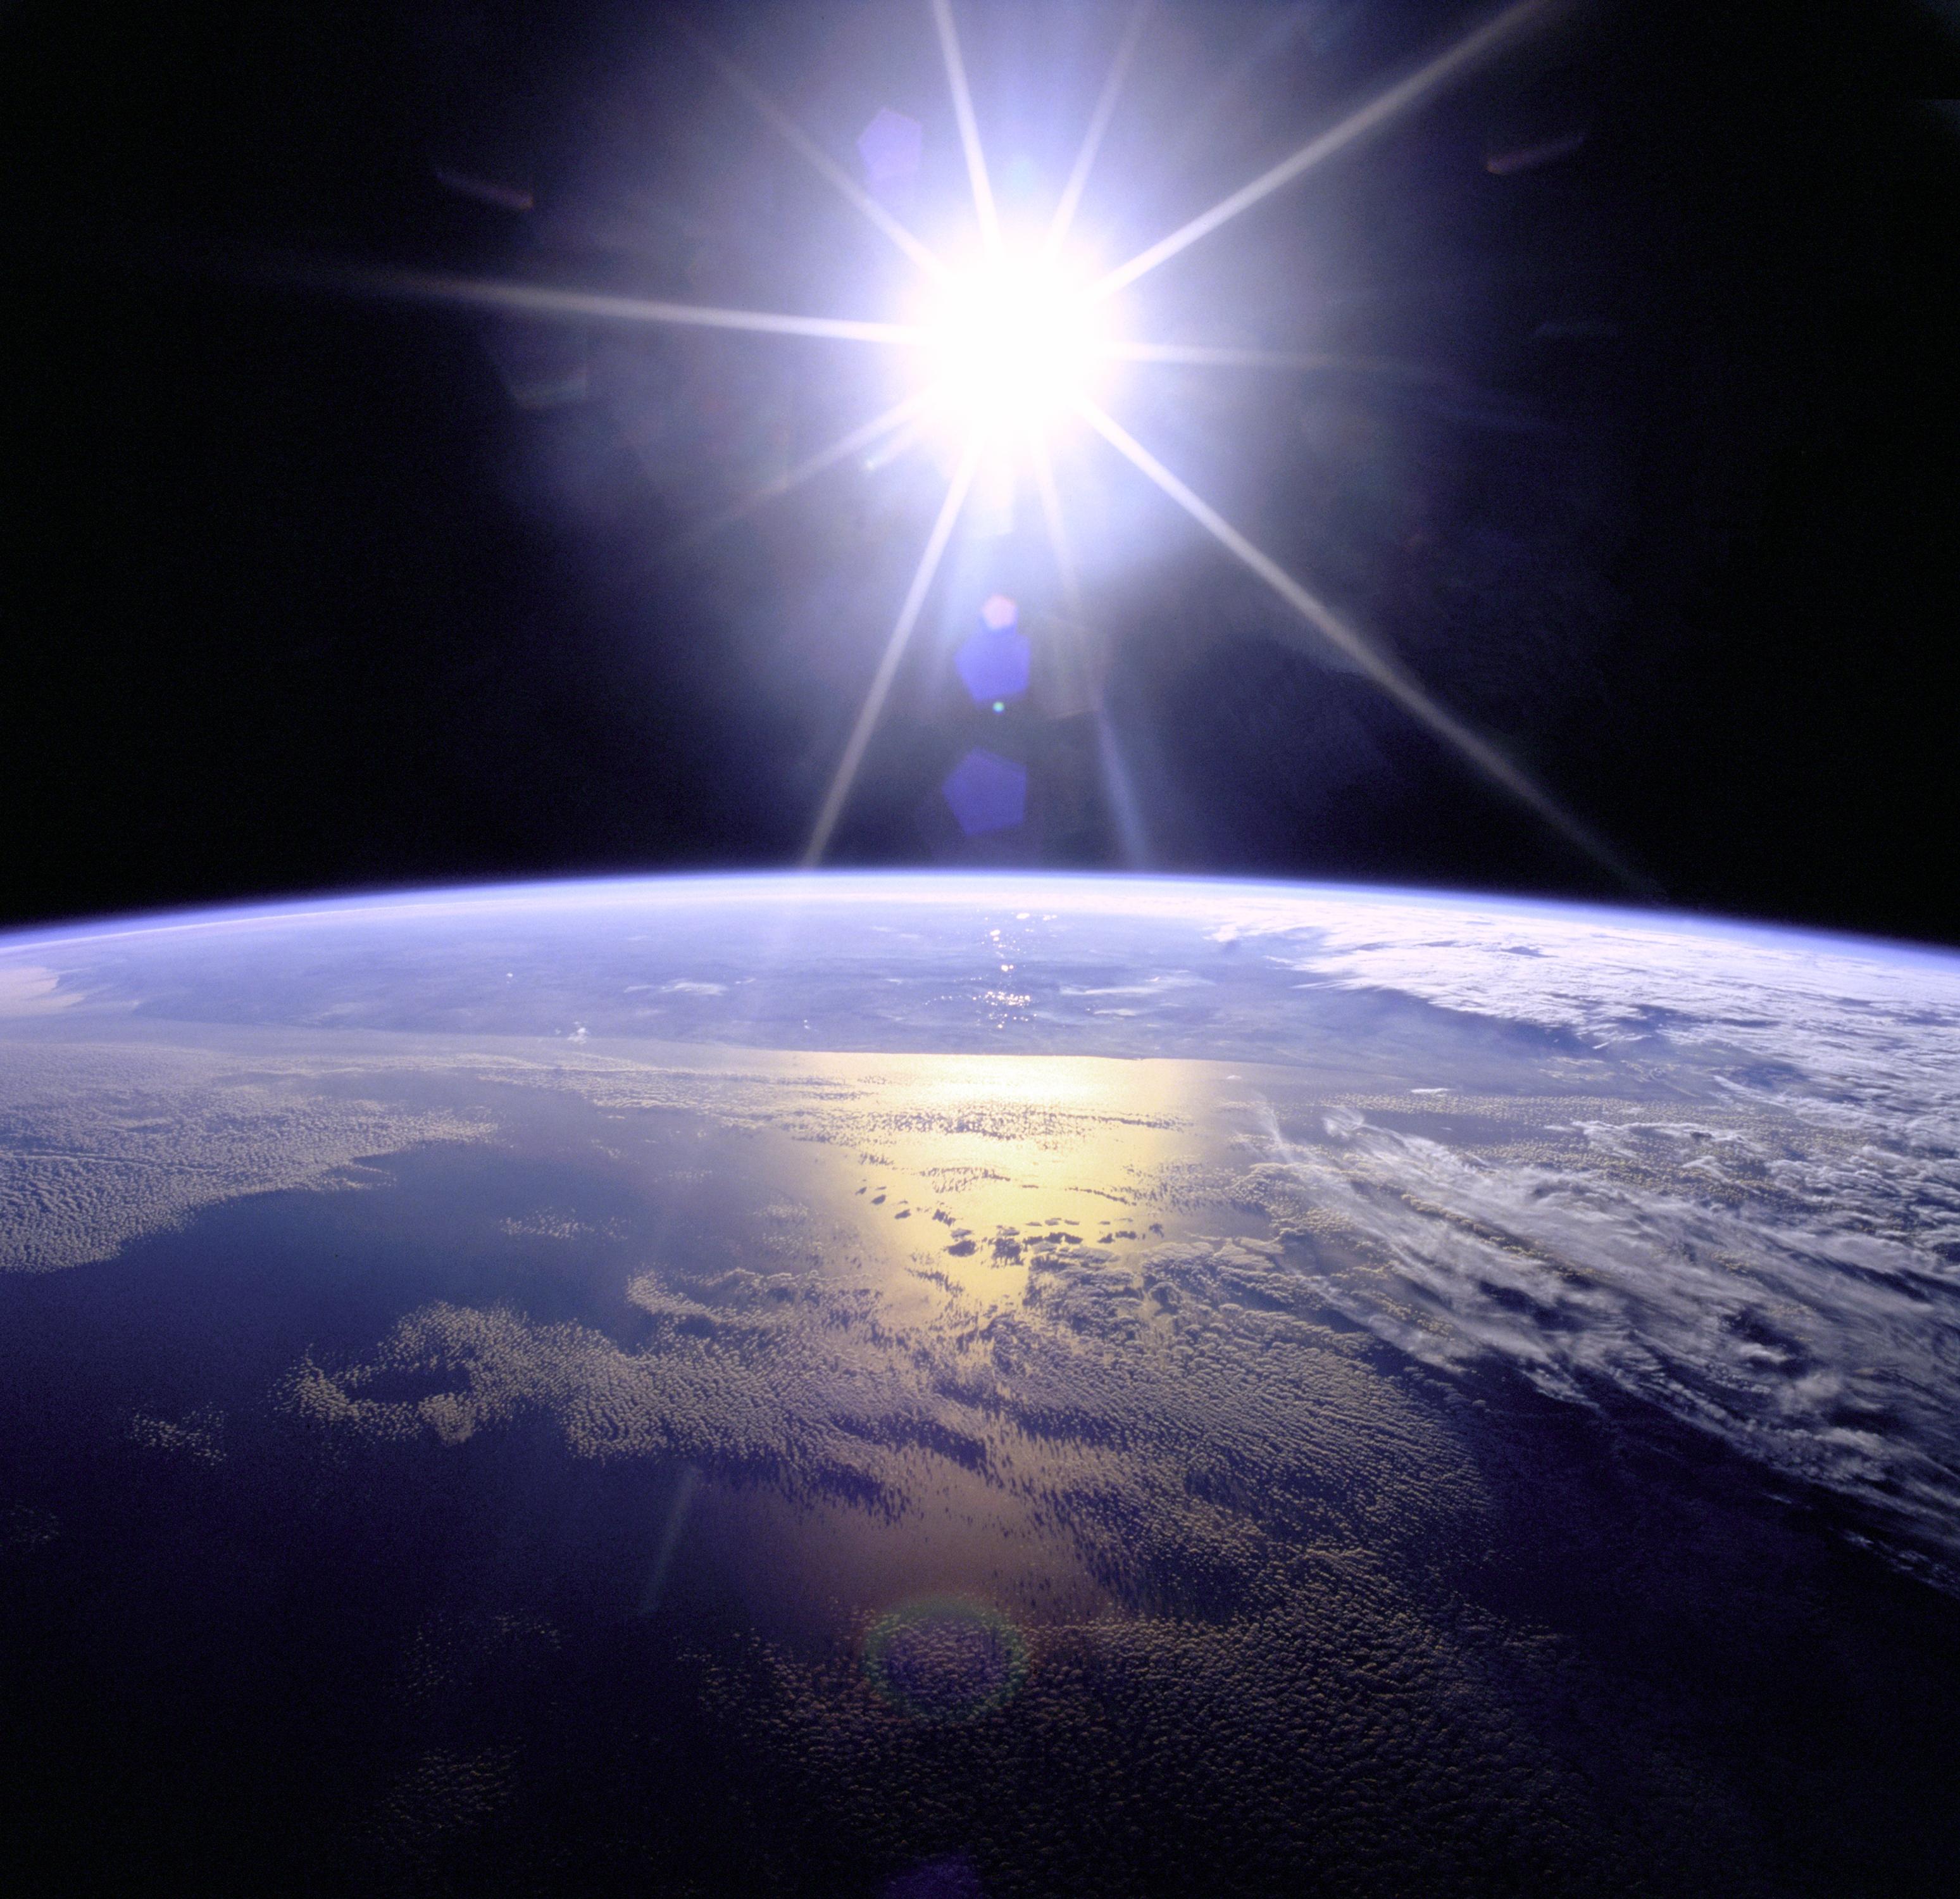 Full Sunburst over Earth found on Wikipedia